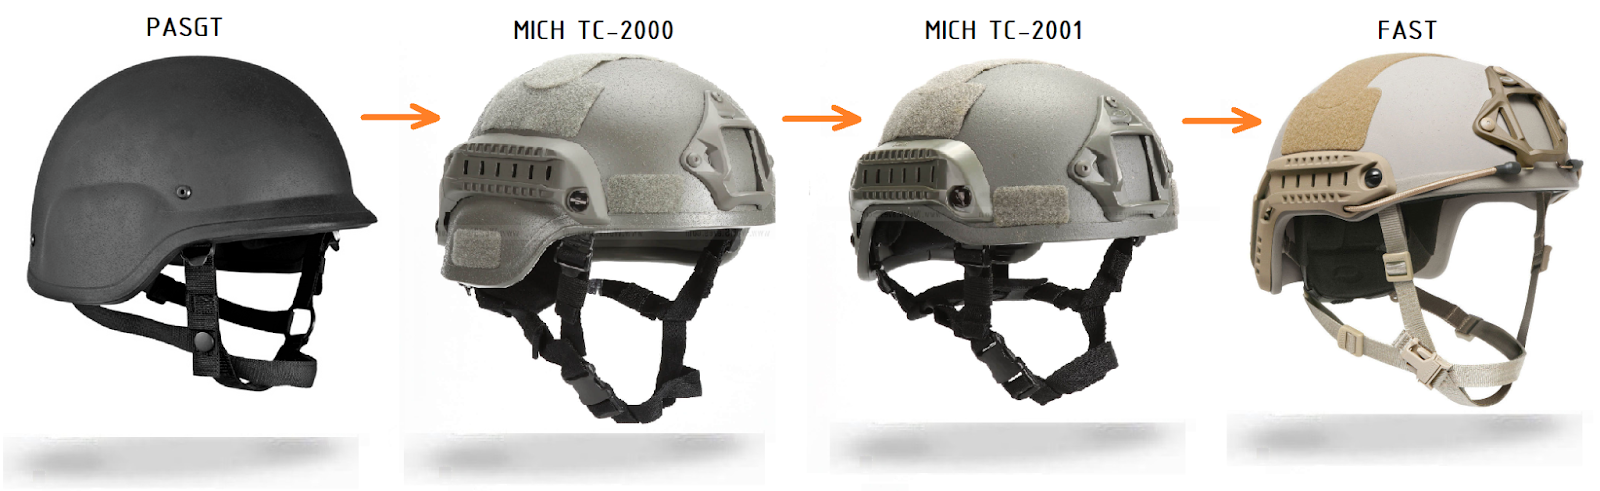 Carbon Steel Tactical Helmet NVG Mount Adapter VAS Shroud for Fast Helmet 